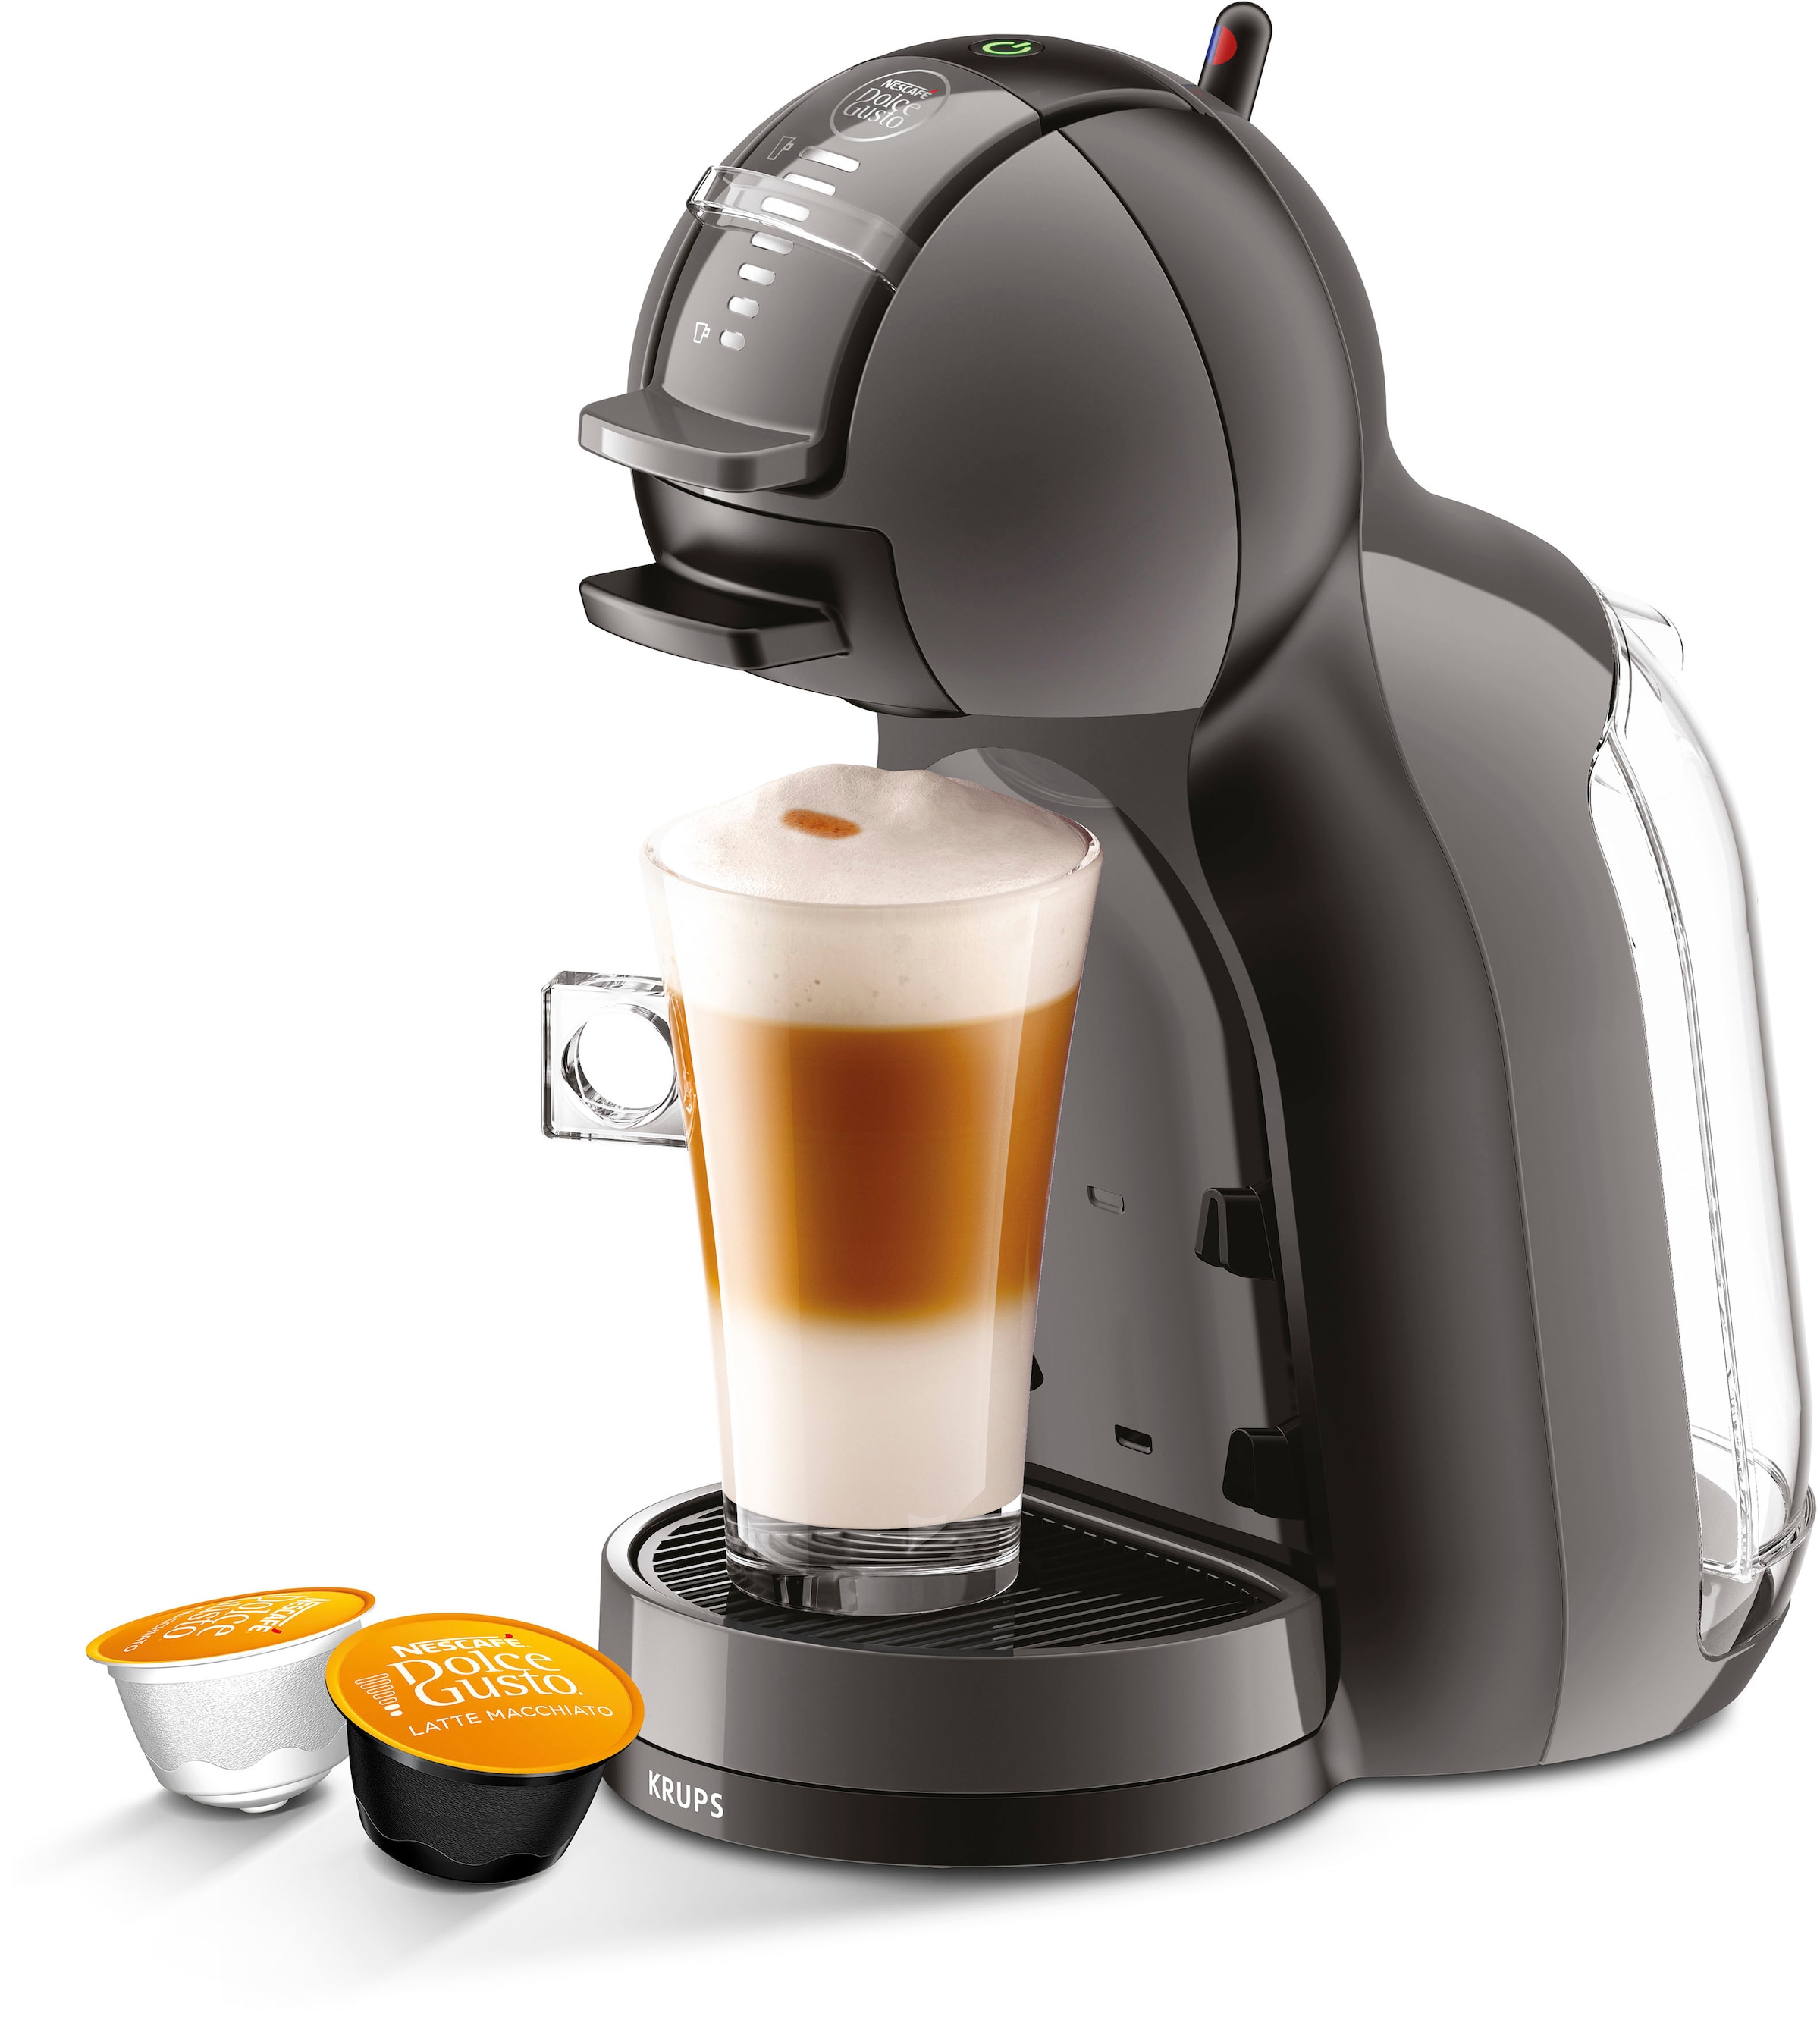 Krups Nescafé® Dolce Gusto® GENIO S KP2431 - Machine à tasses à